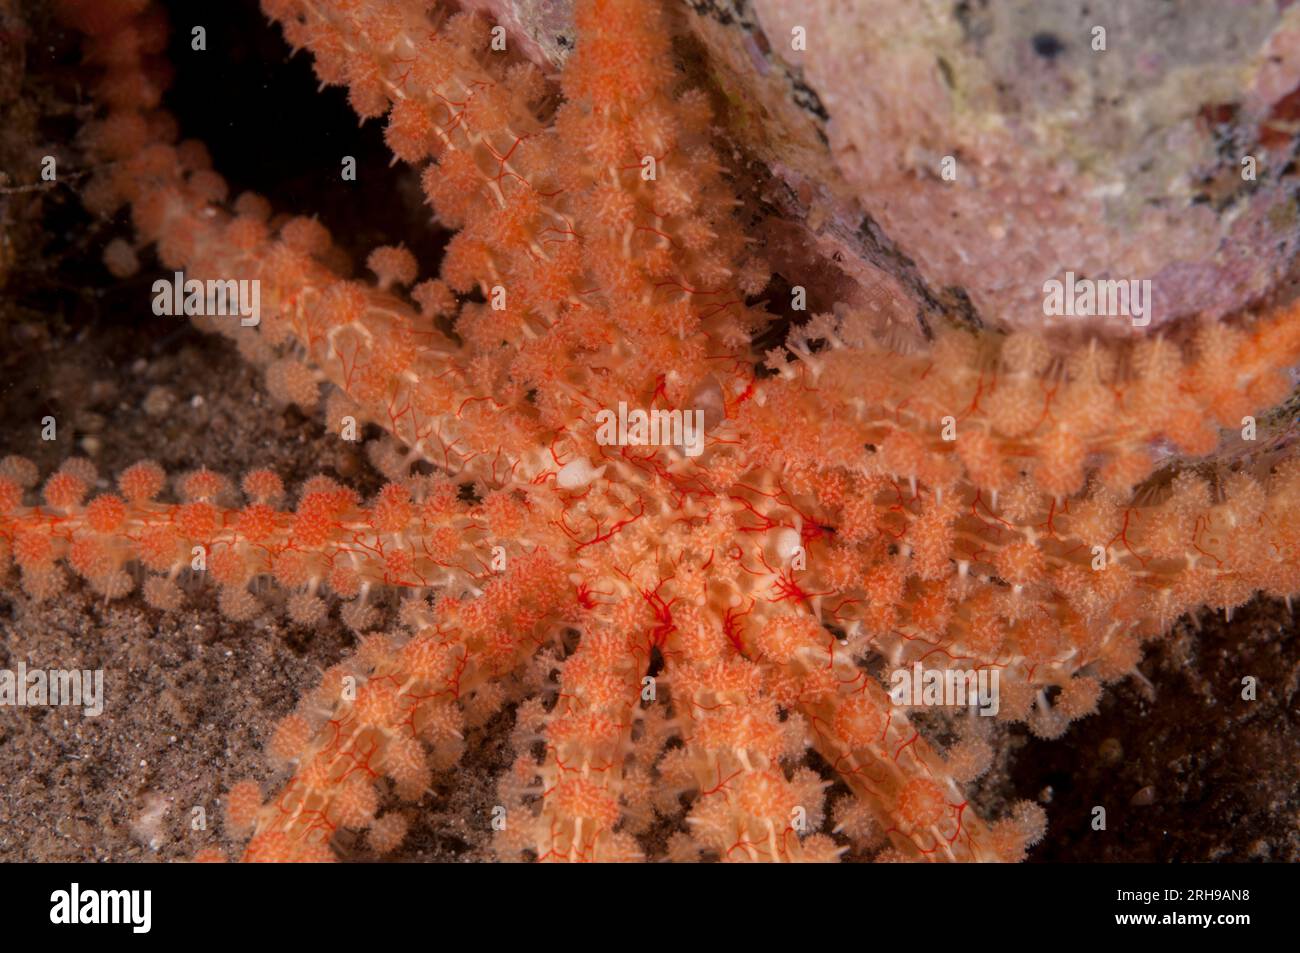 Asteriid Starfish, Coronaster sp, with 11 arms, night dive, Mosque Muck dive site, near Reta Island, near Alor, Indonesia Stock Photo